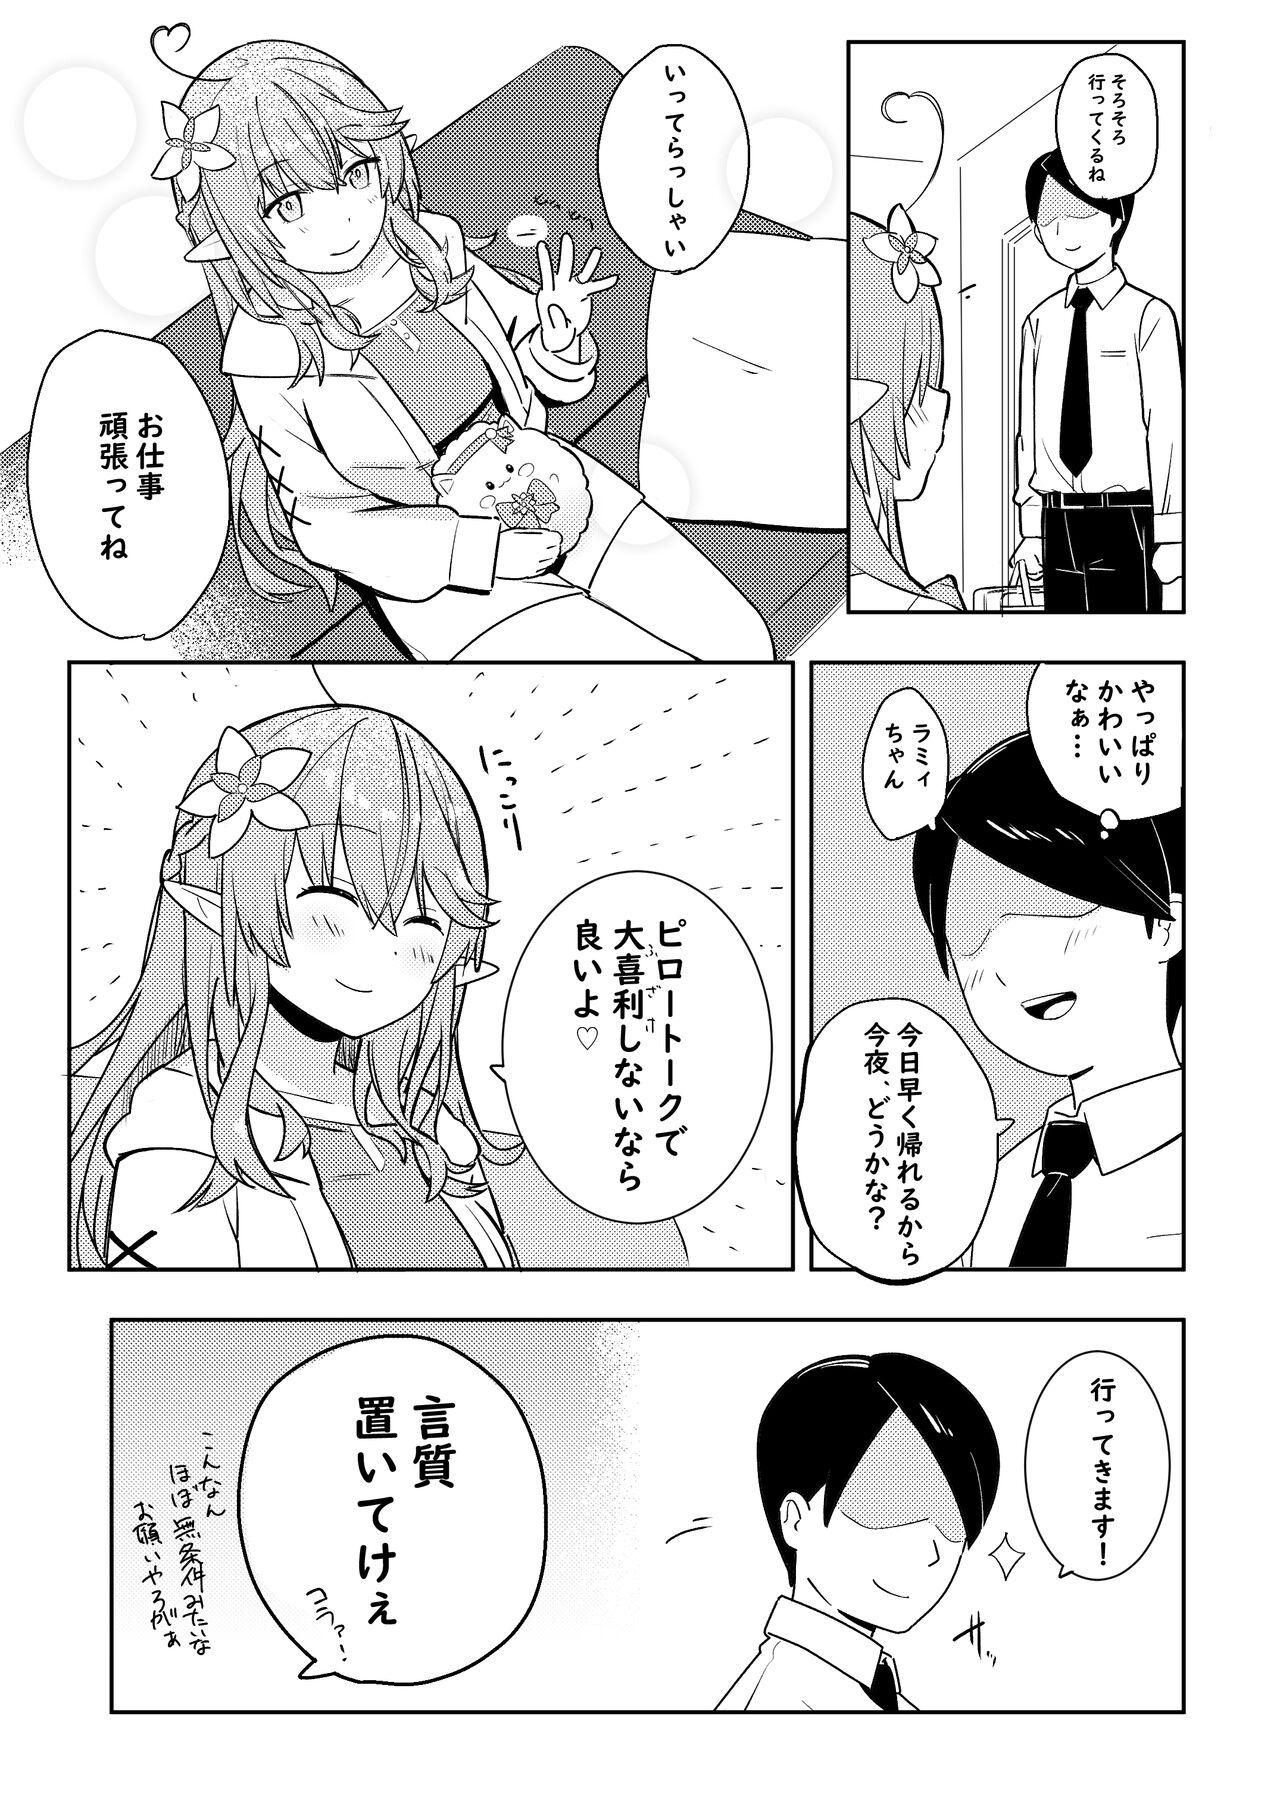 Deflowered Twitter Short Manga - Hololive Bukkake - Page 4